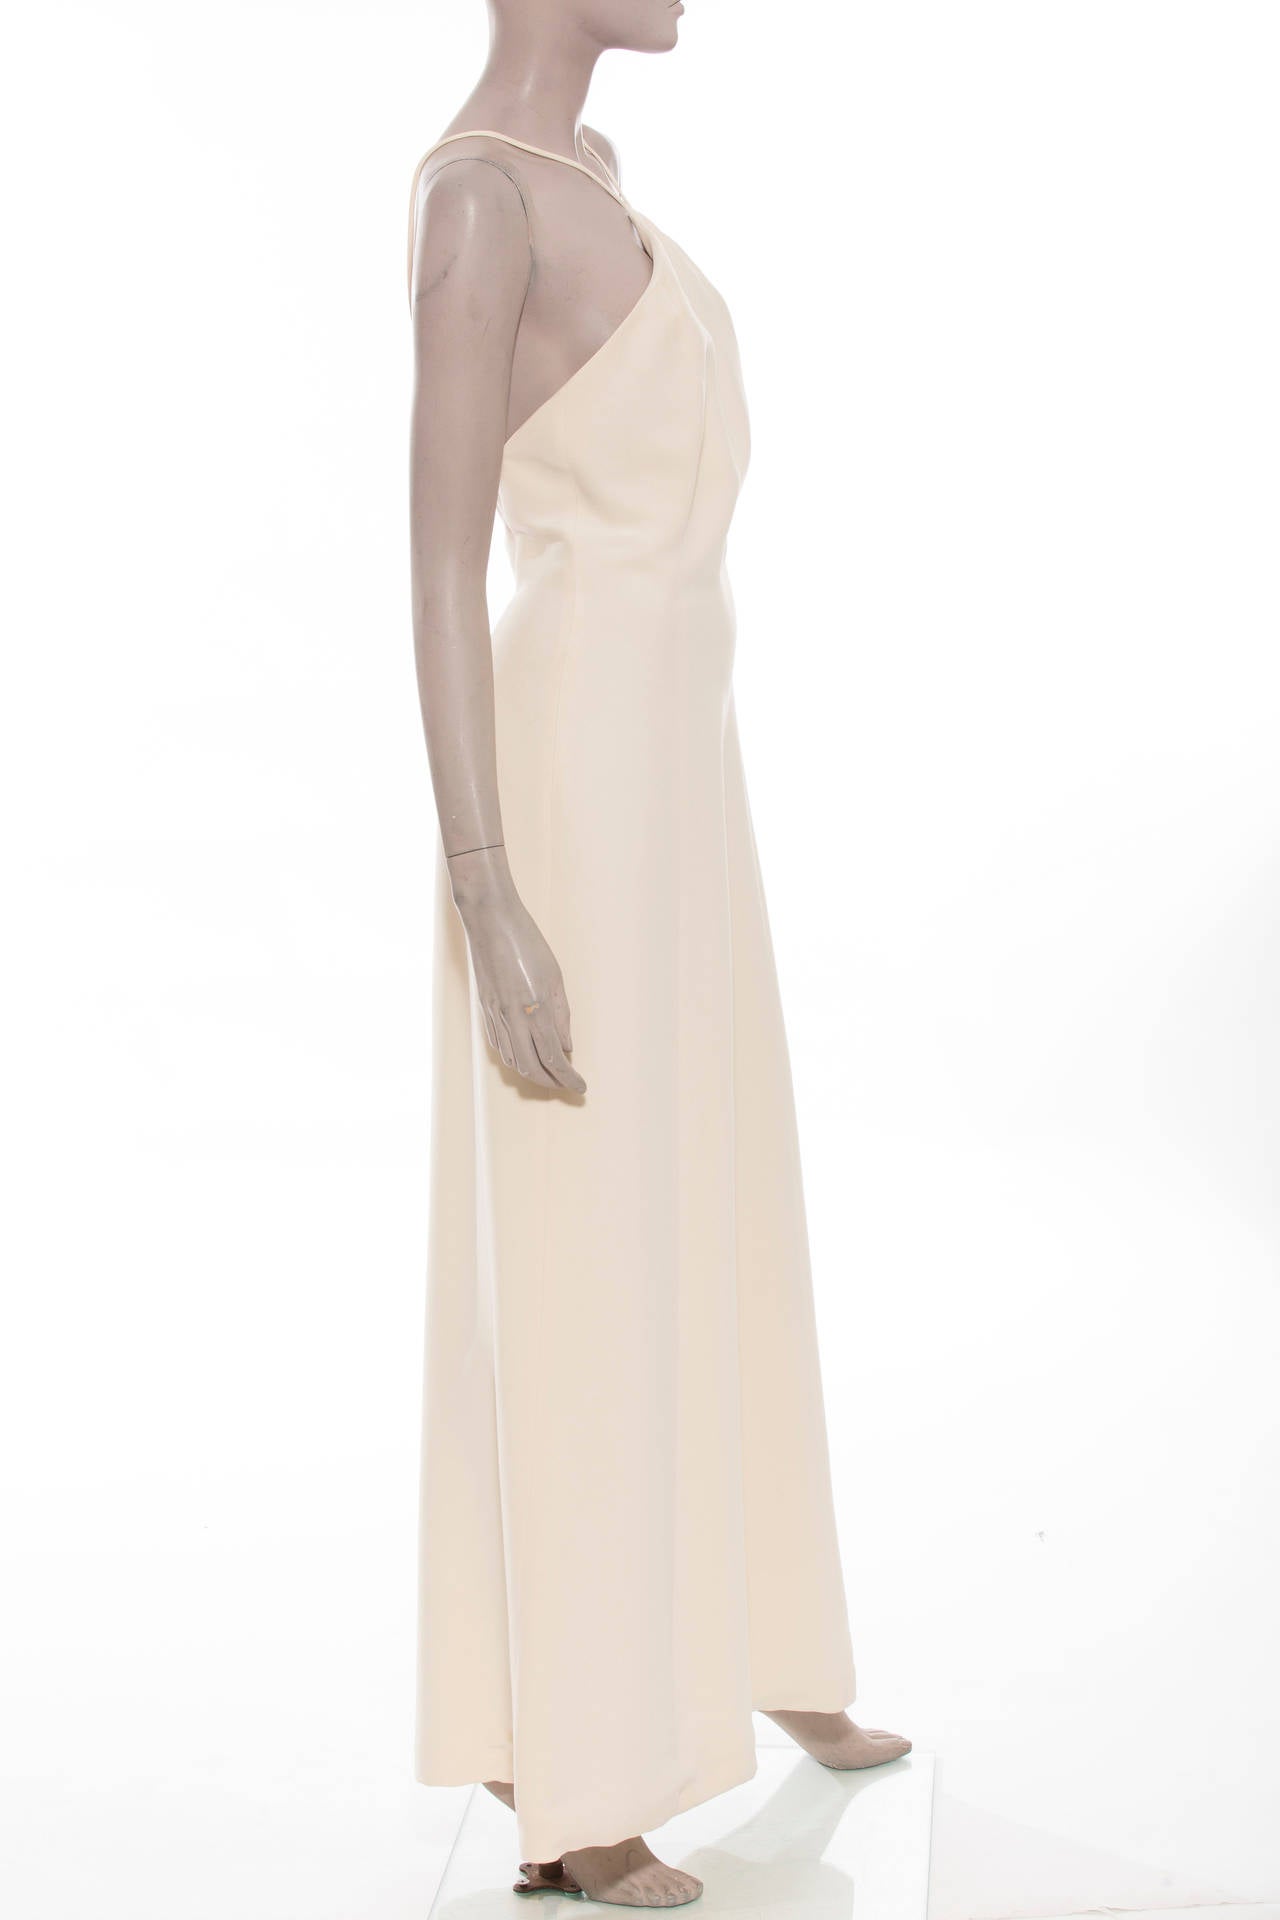 Prada ivory crepe long dress, back zipper and fully lined. EU. size 42